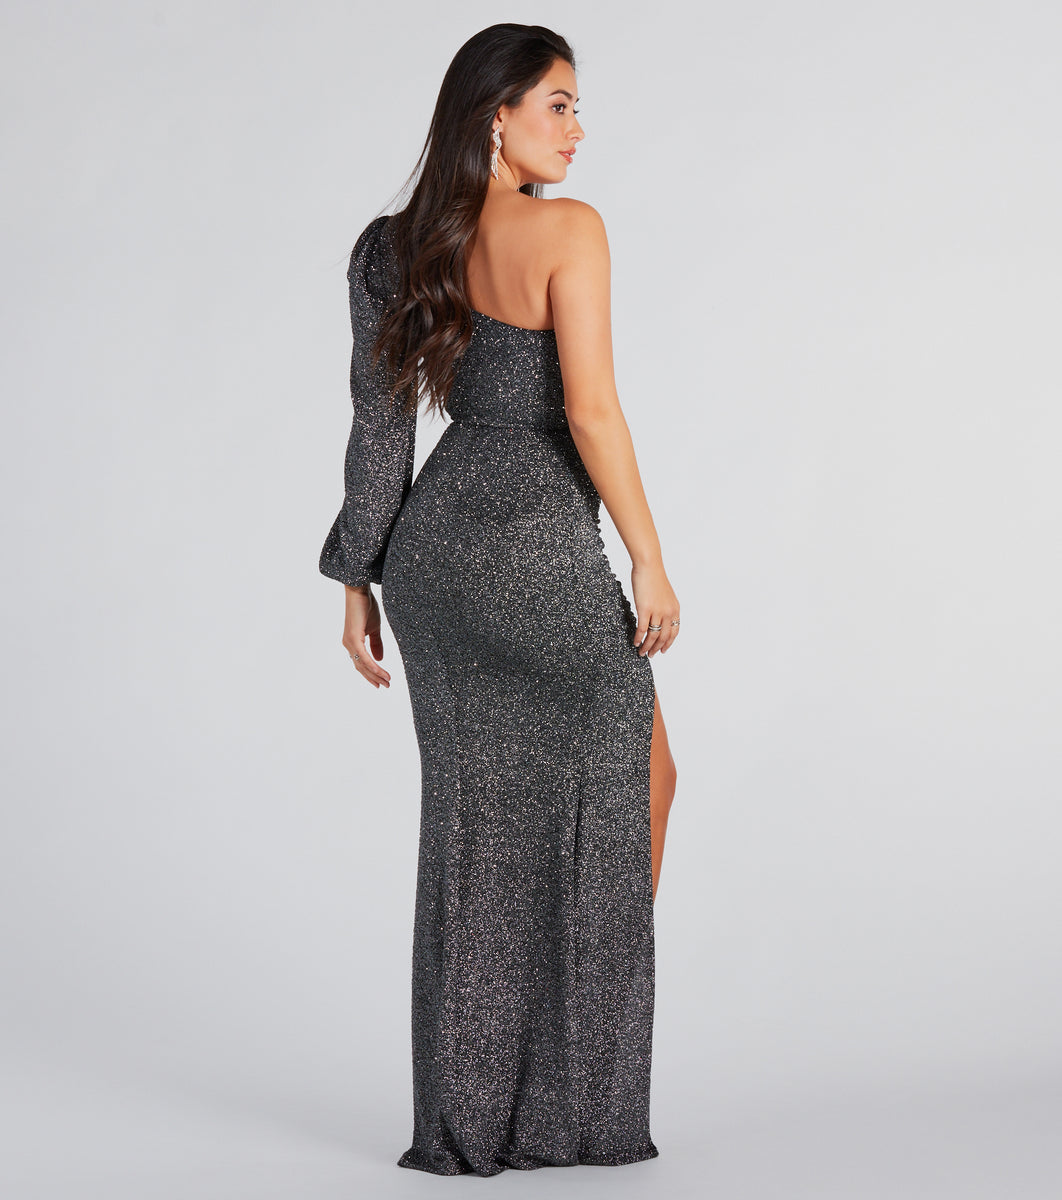 Sierra Formal Glitter Long Sleeve Mermaid Dress & Windsor